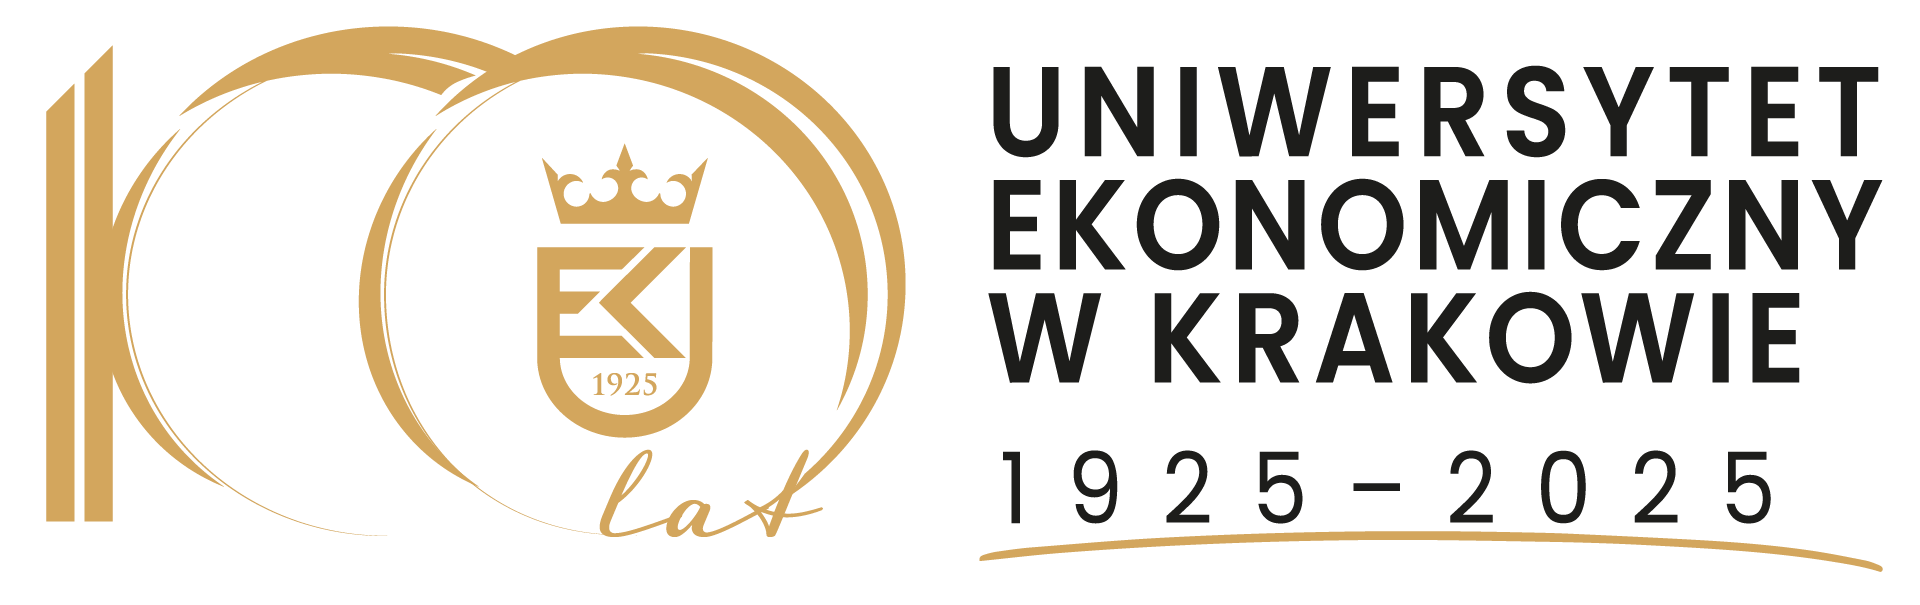 100-lat-UEK-logo-poziom